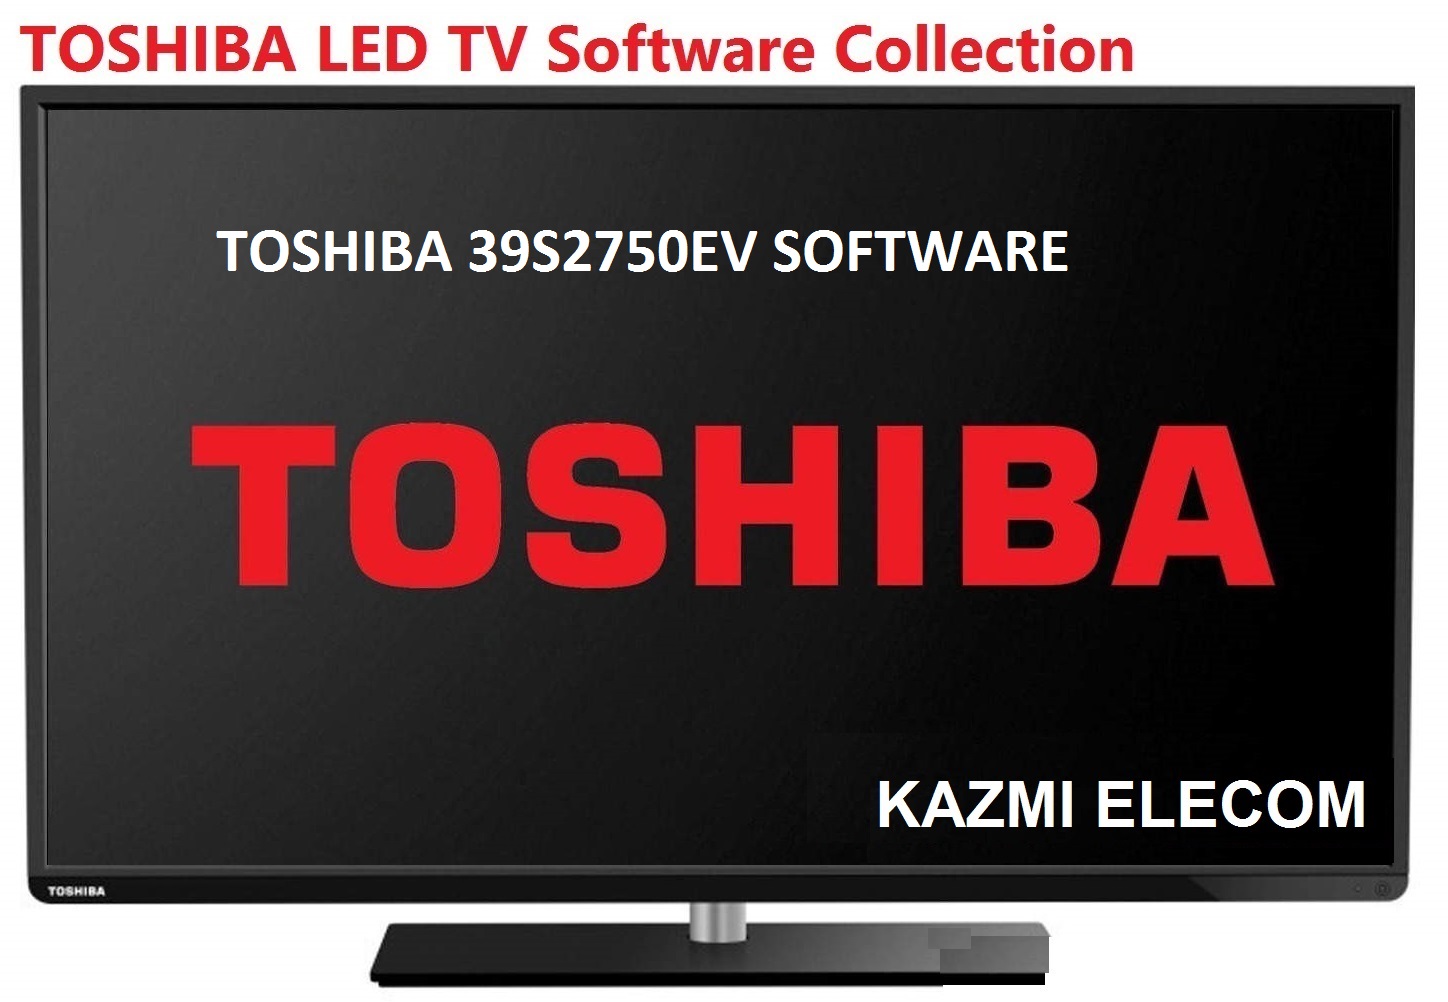 Toshiba 39S2750Ev